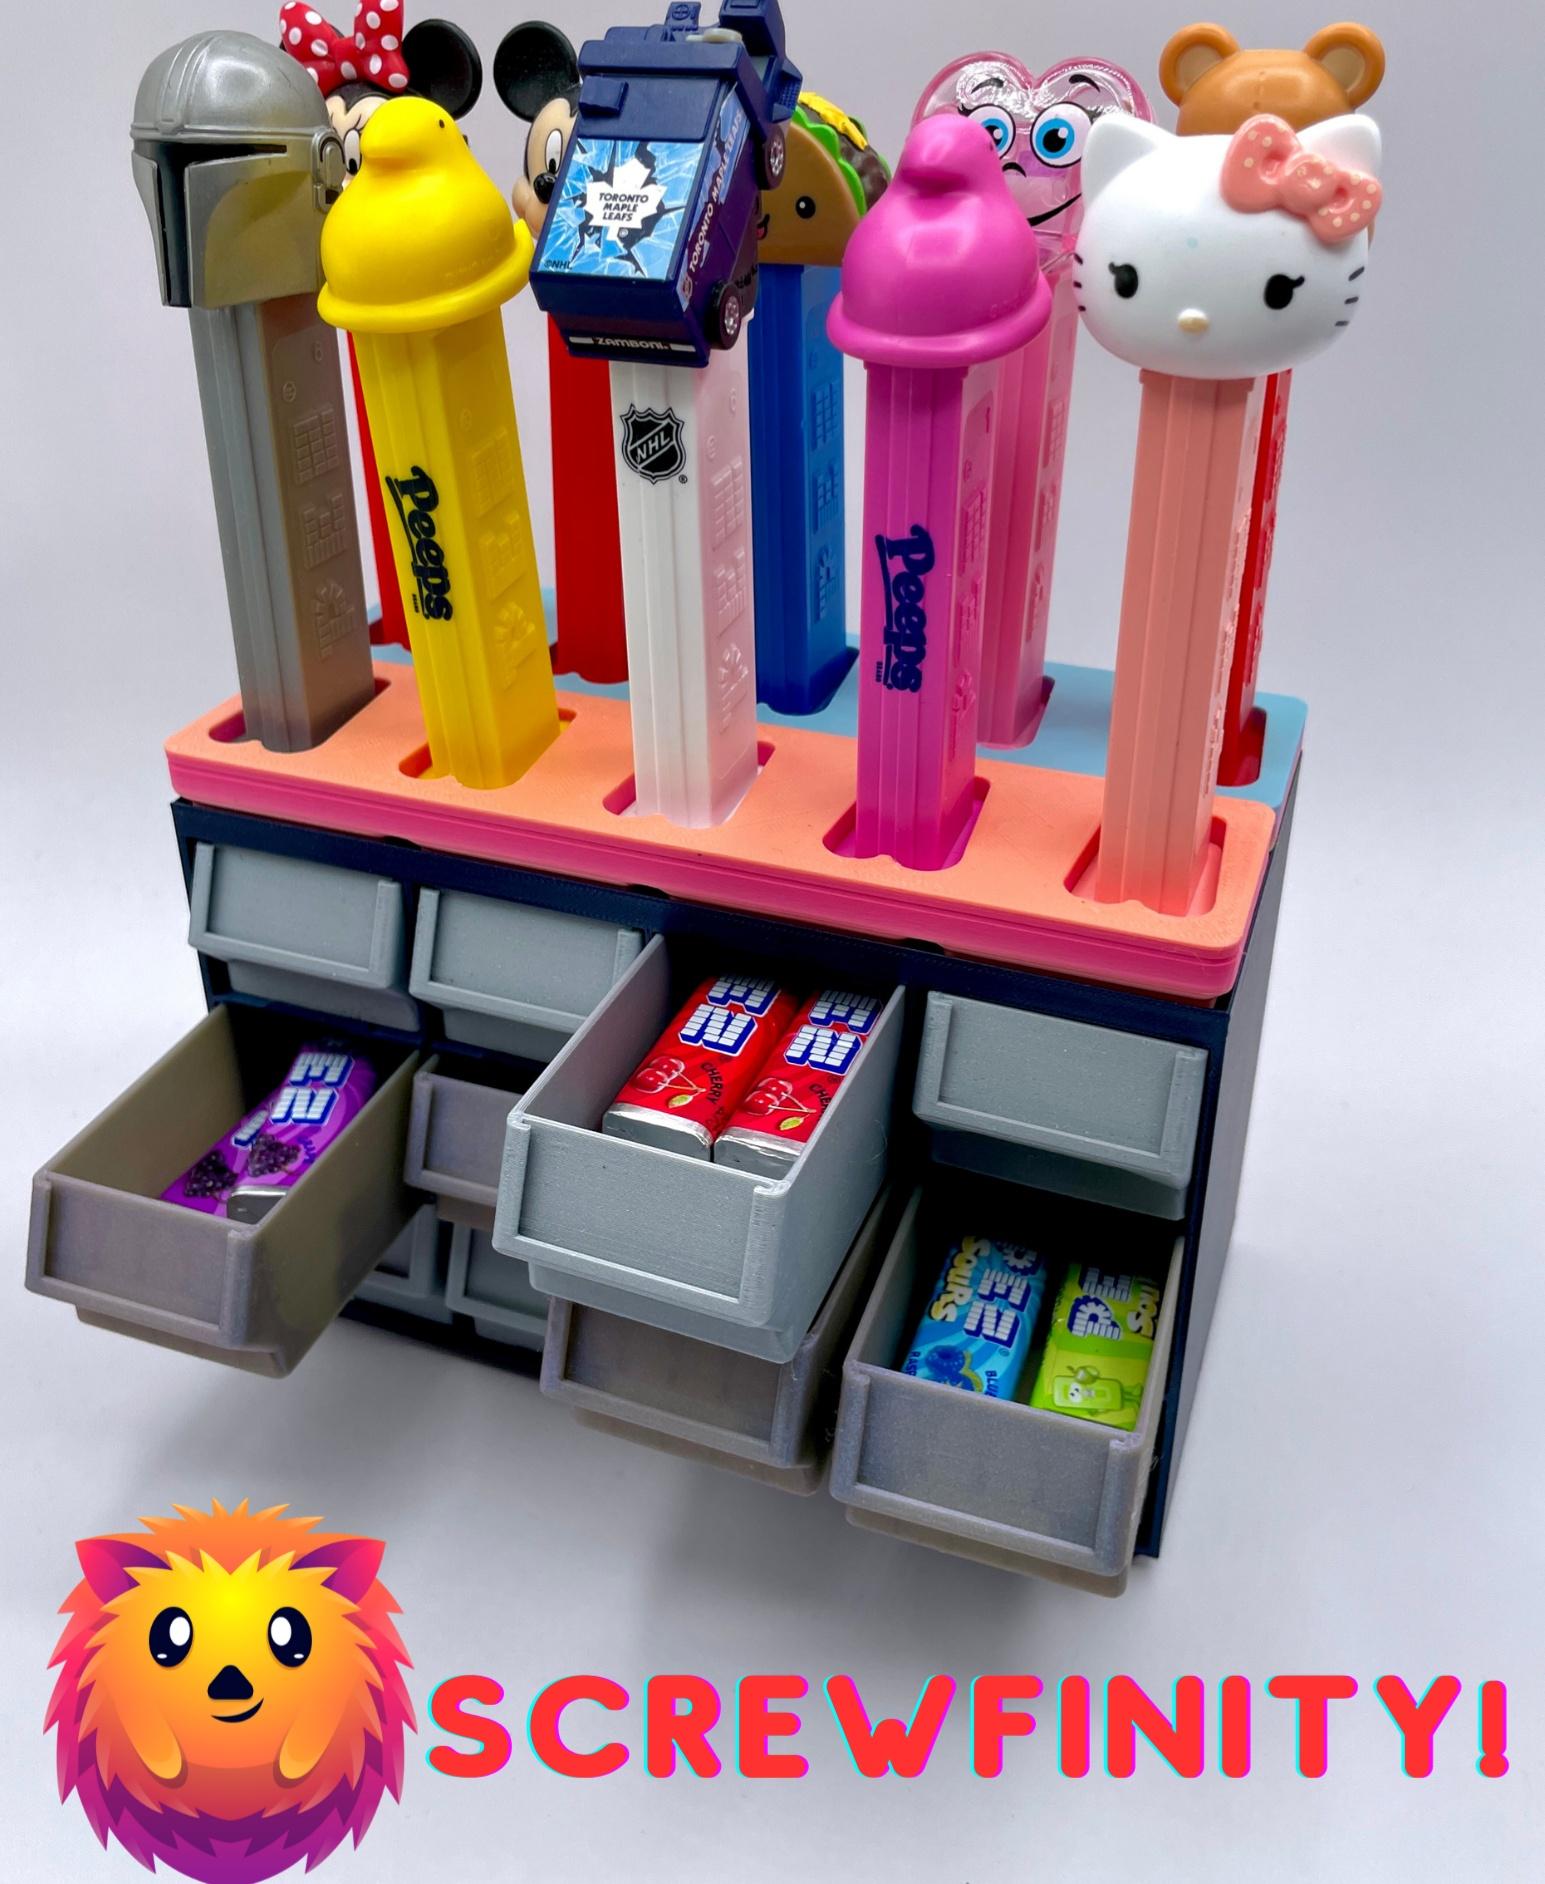 Screwfinity Unit 2U Medium - The Gridfinity Storage Unit - Finally, a place to store my PEZ candy! - 3d model